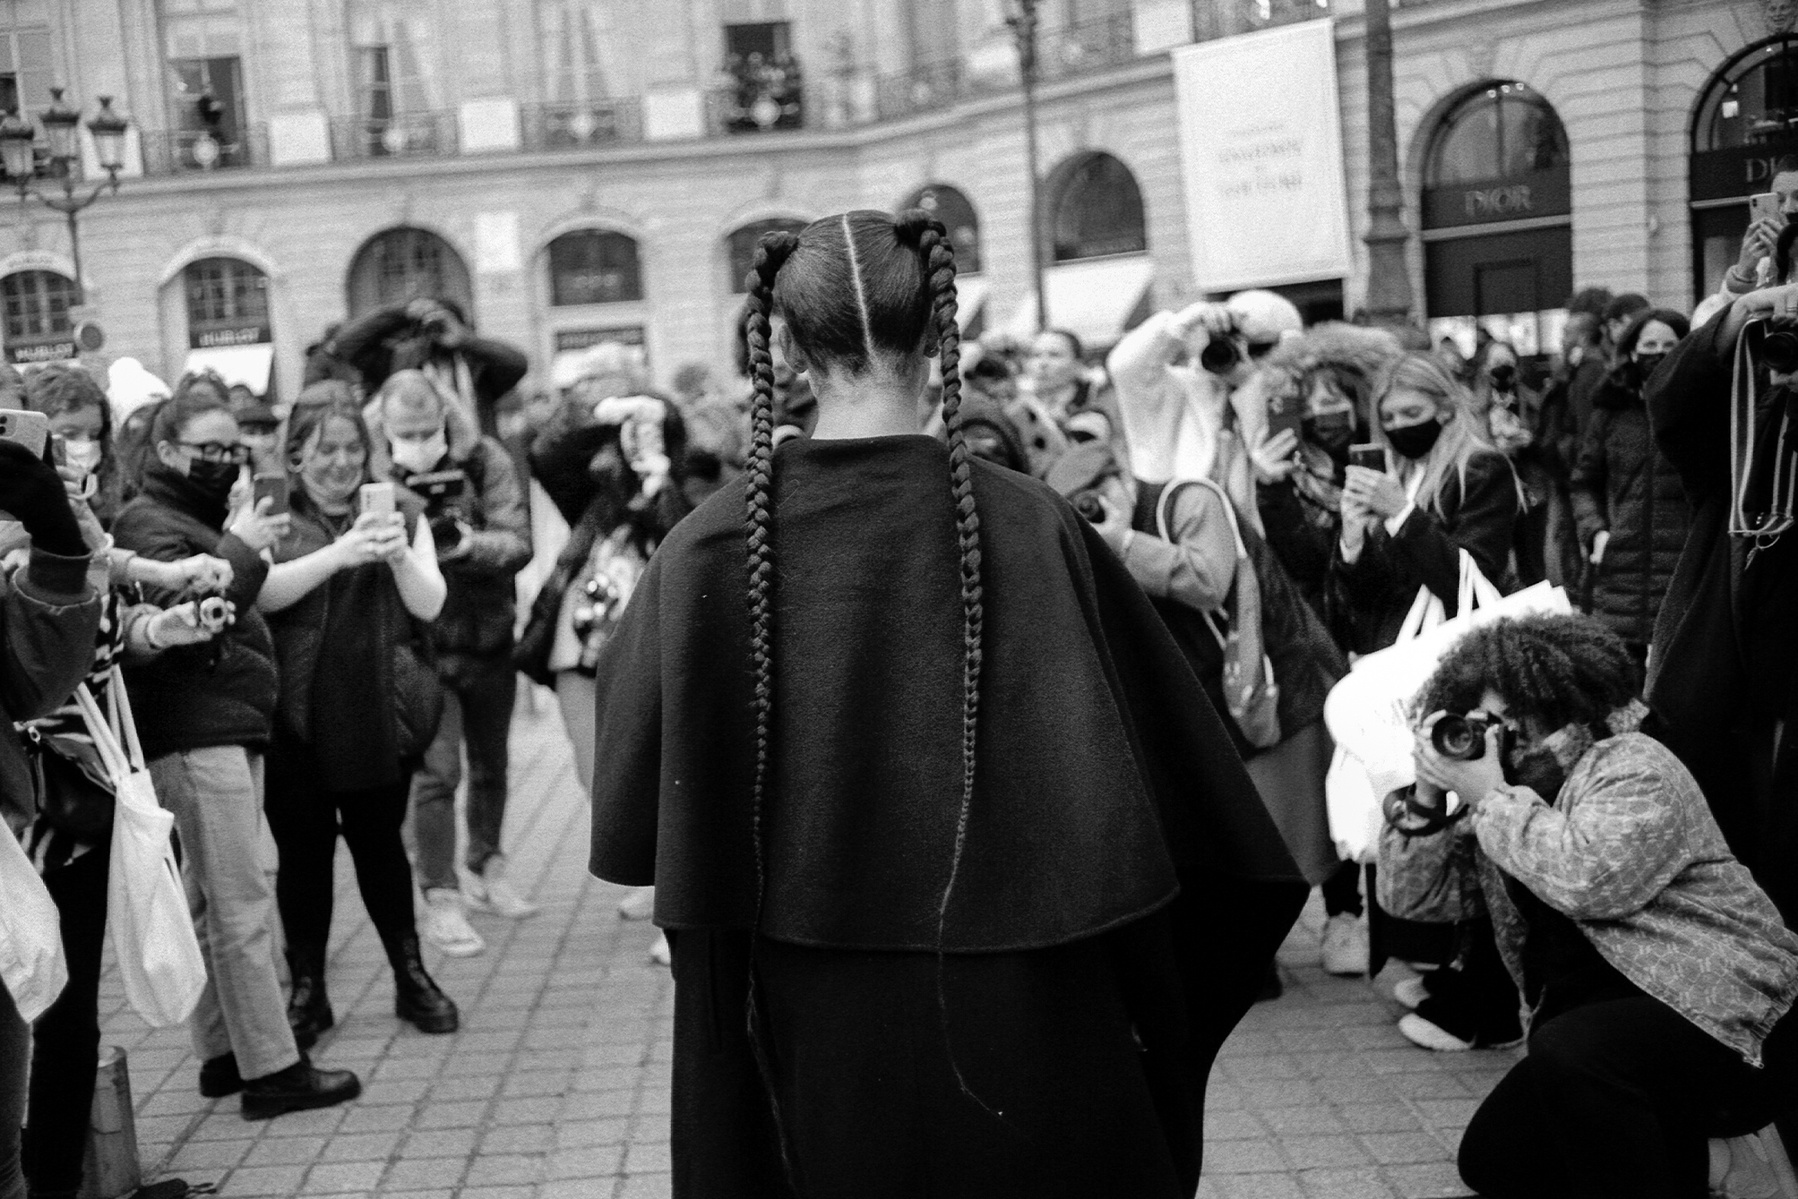 35mm photos shot at Valentino Paris Fashion Week 2022 by Grégoire Huret, on kodak film with Leica M6